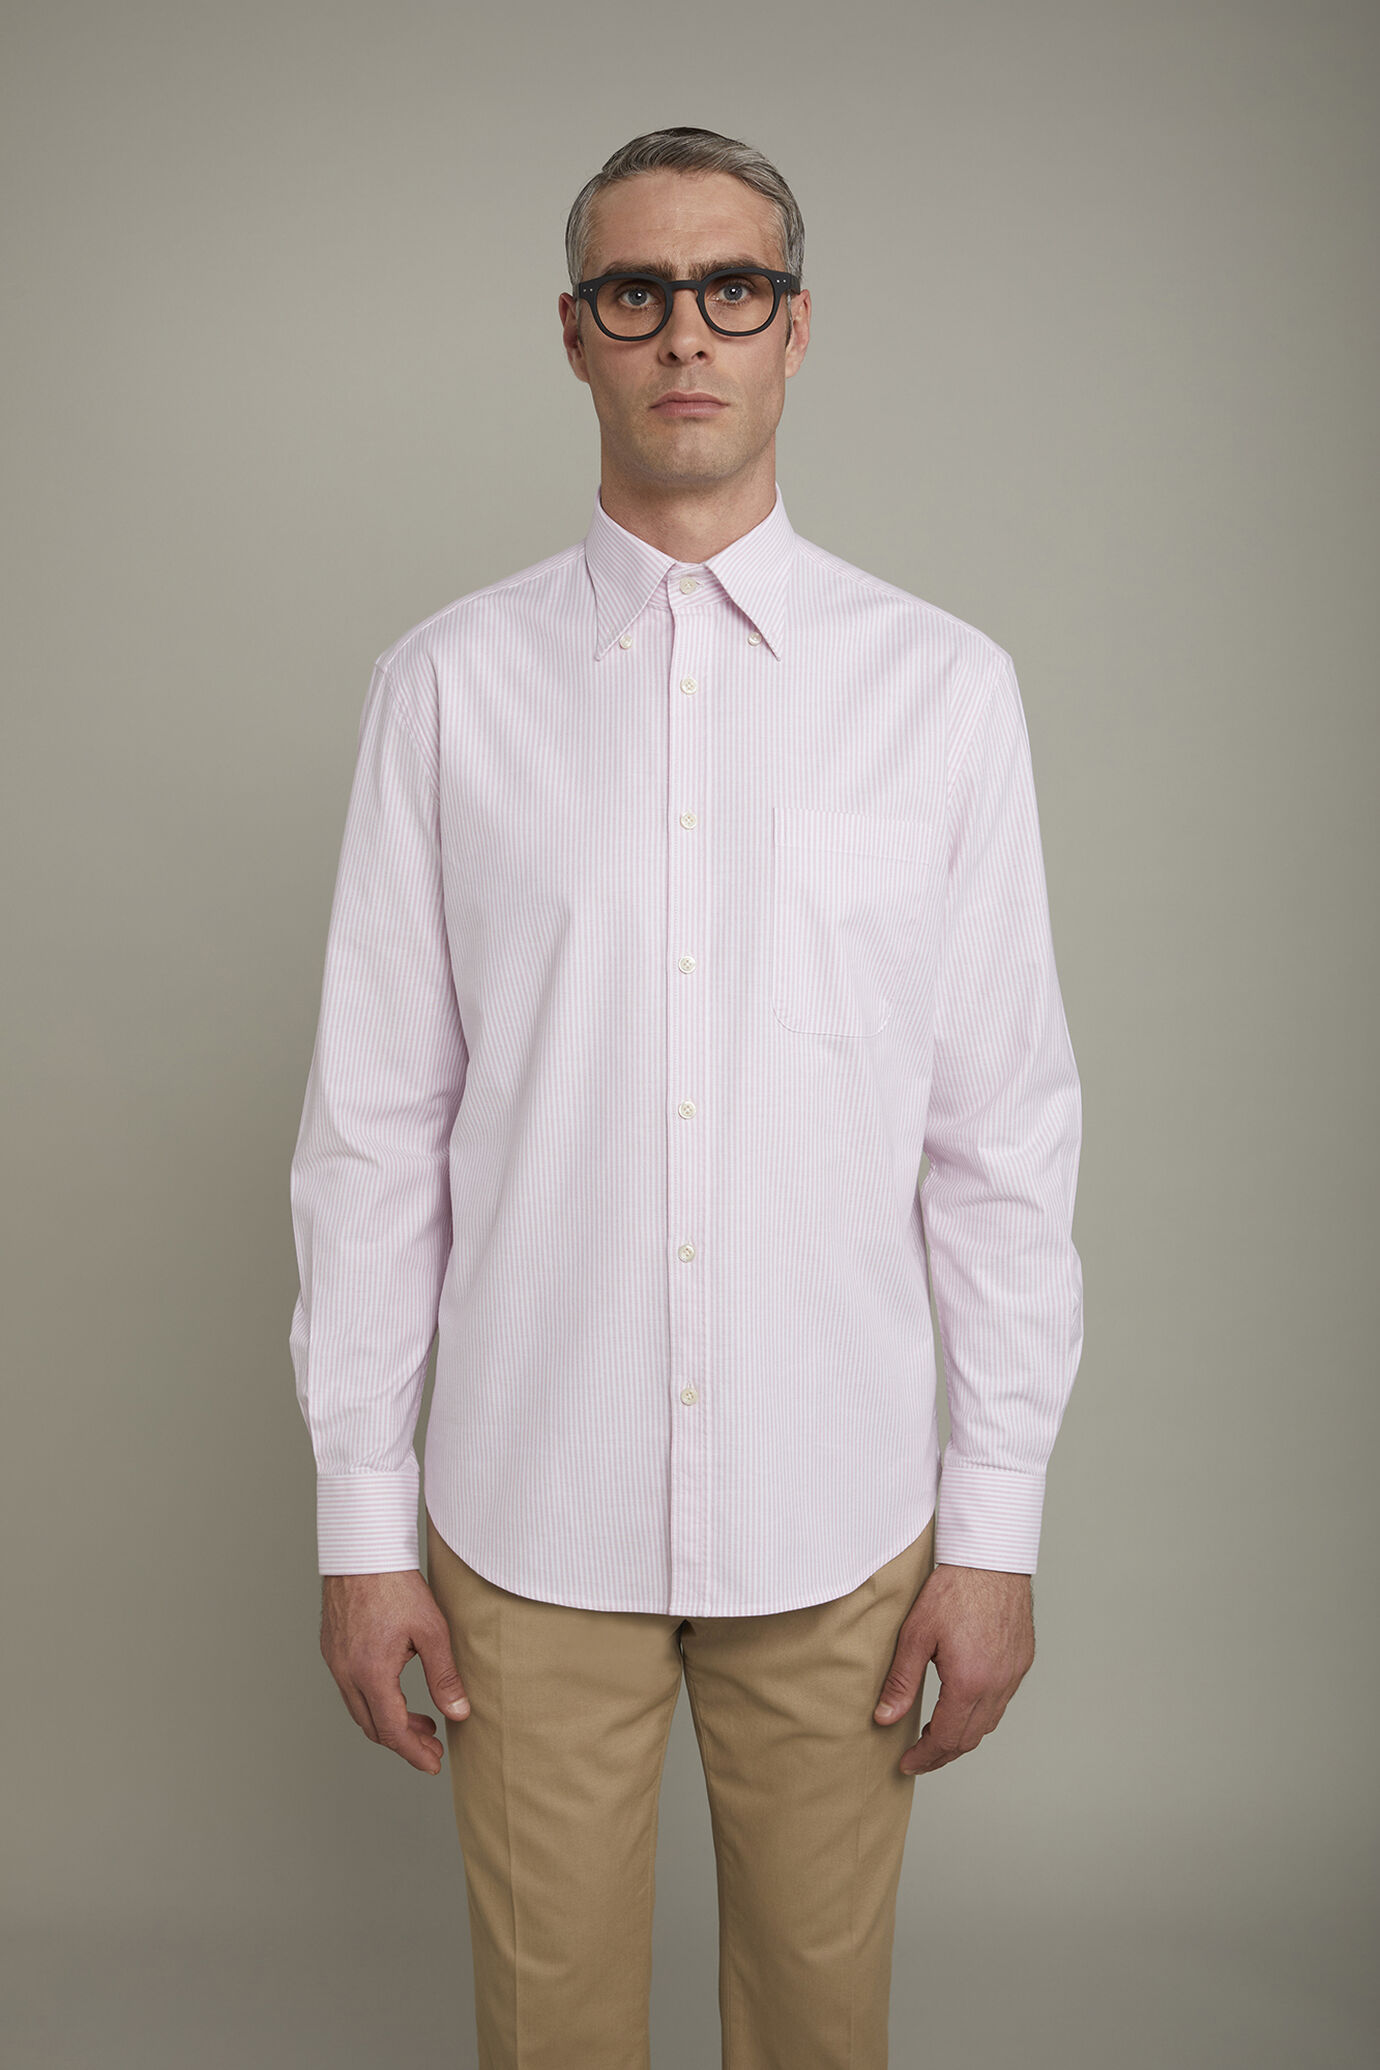 Men’s classic shirt button down collar ultra light striped Oxford fabric comfort fit